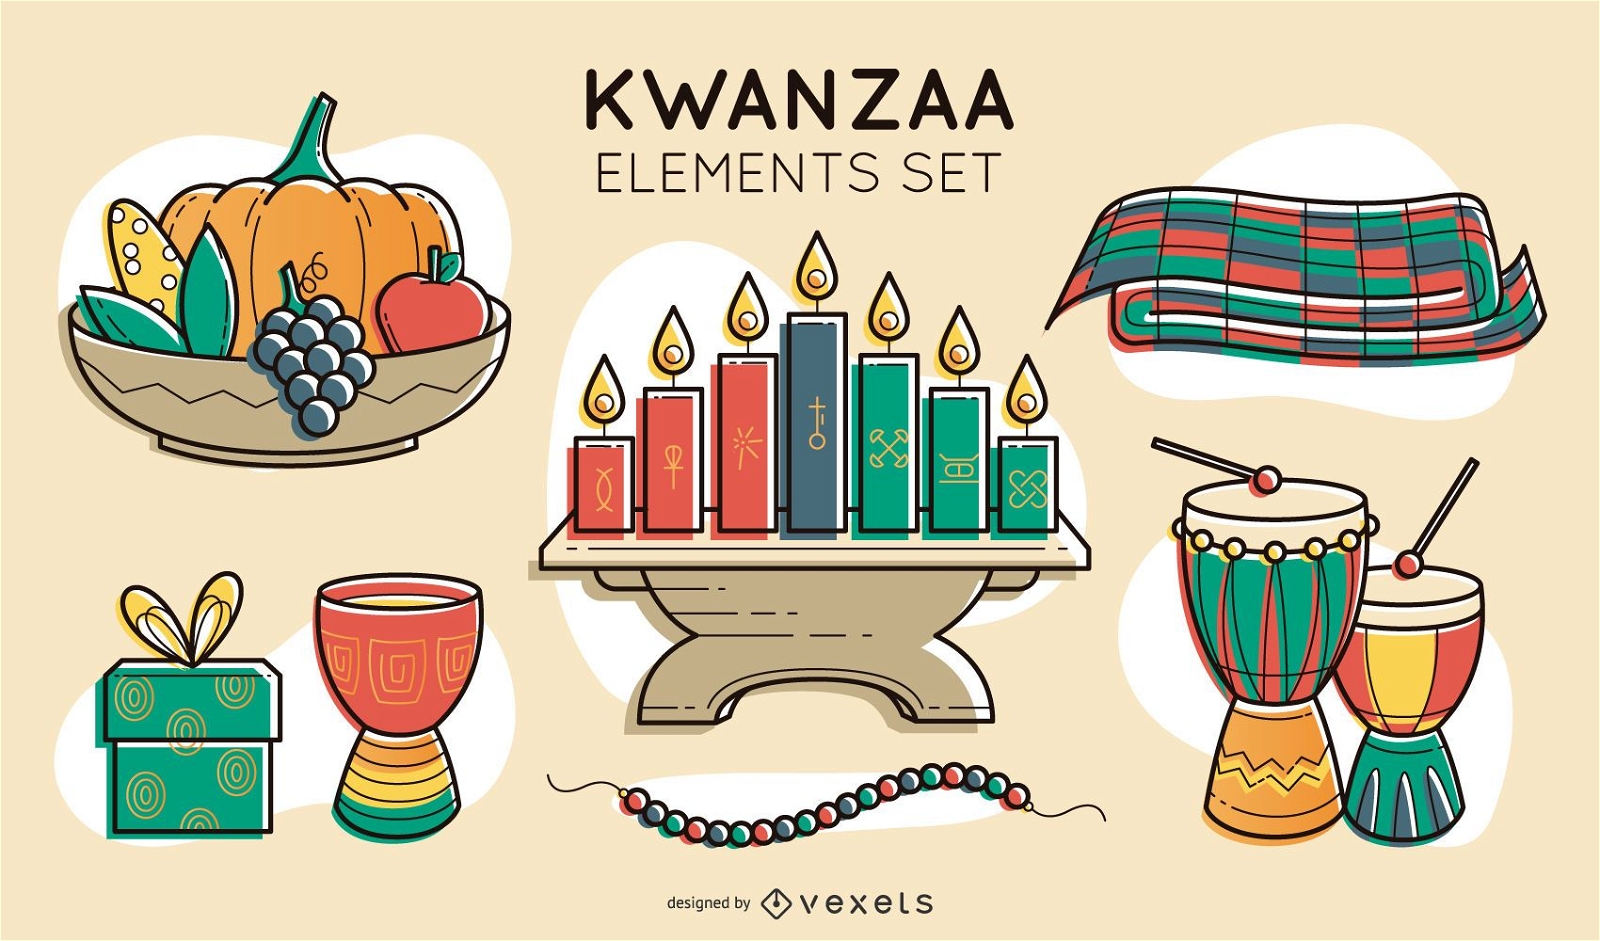 Kwanzaa elements set